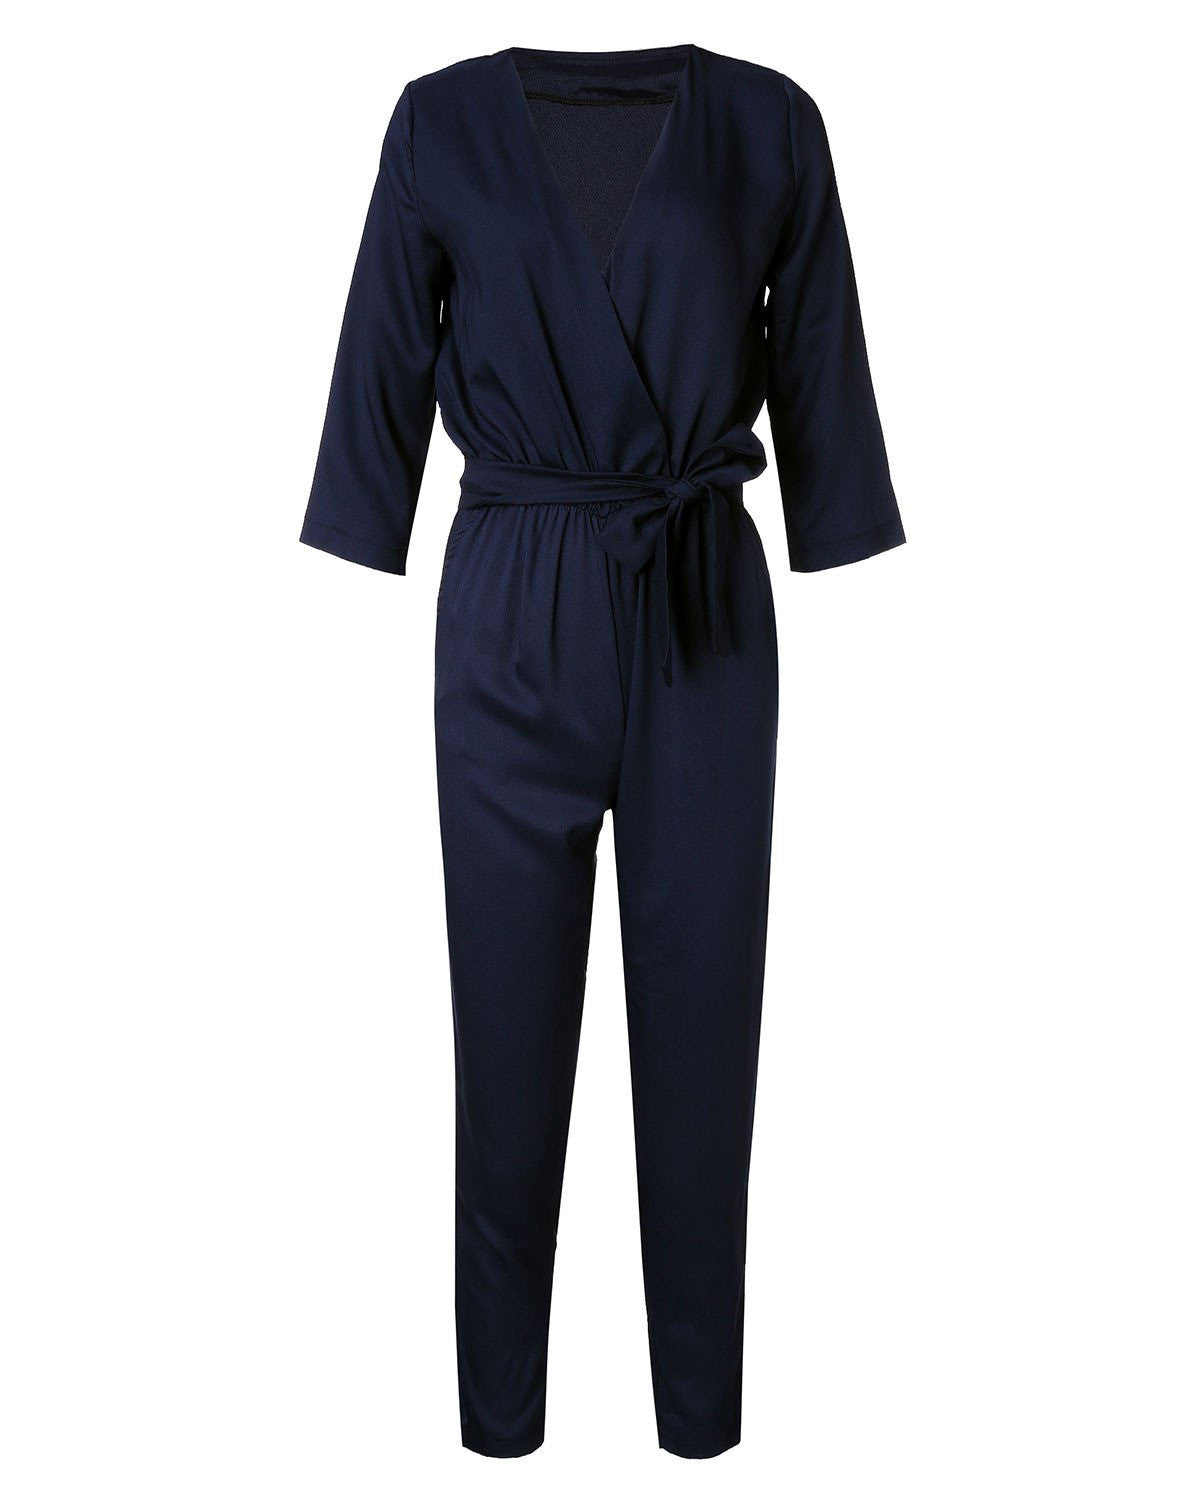 Online discount shop Australia - New Arrival Women Jumpsuits  Bodysuit Half Sleeve V Neck Casual Elegant Ladies Long Office OL Rompers Overalls